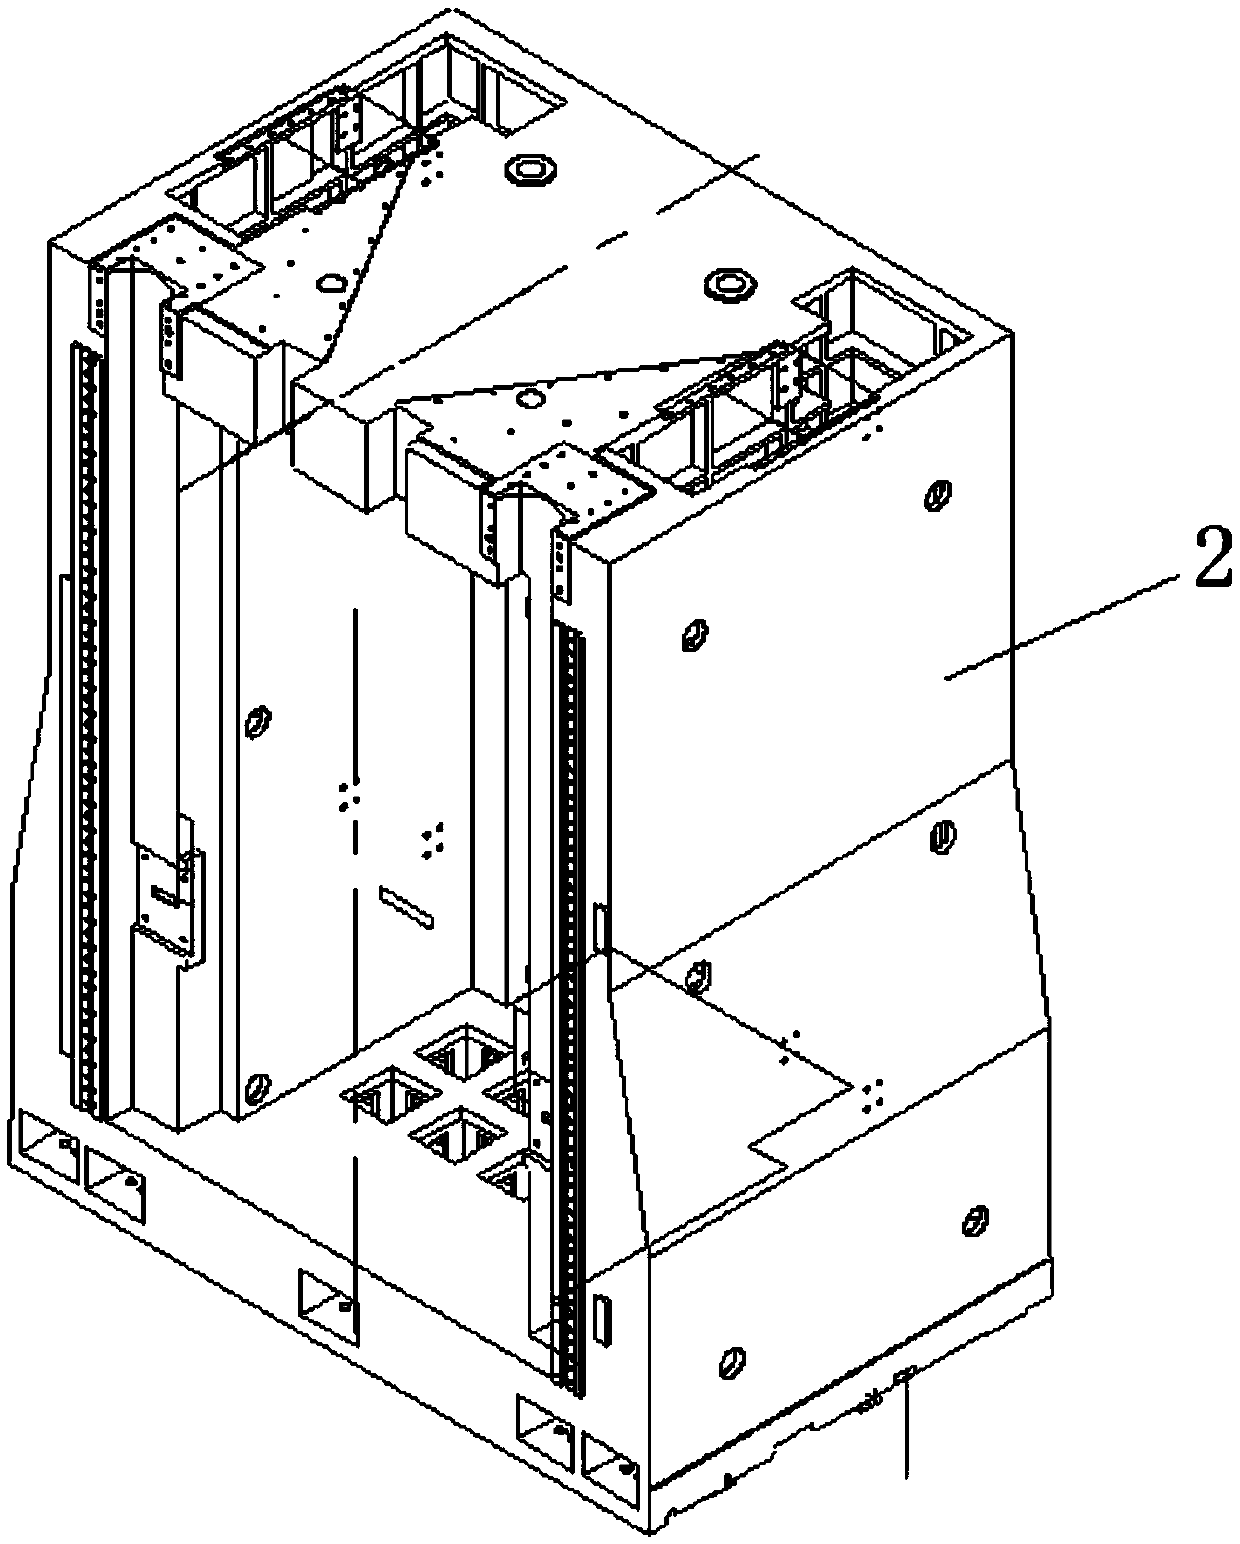 Topological optimization design method for stand column structure of friction stir welding robot